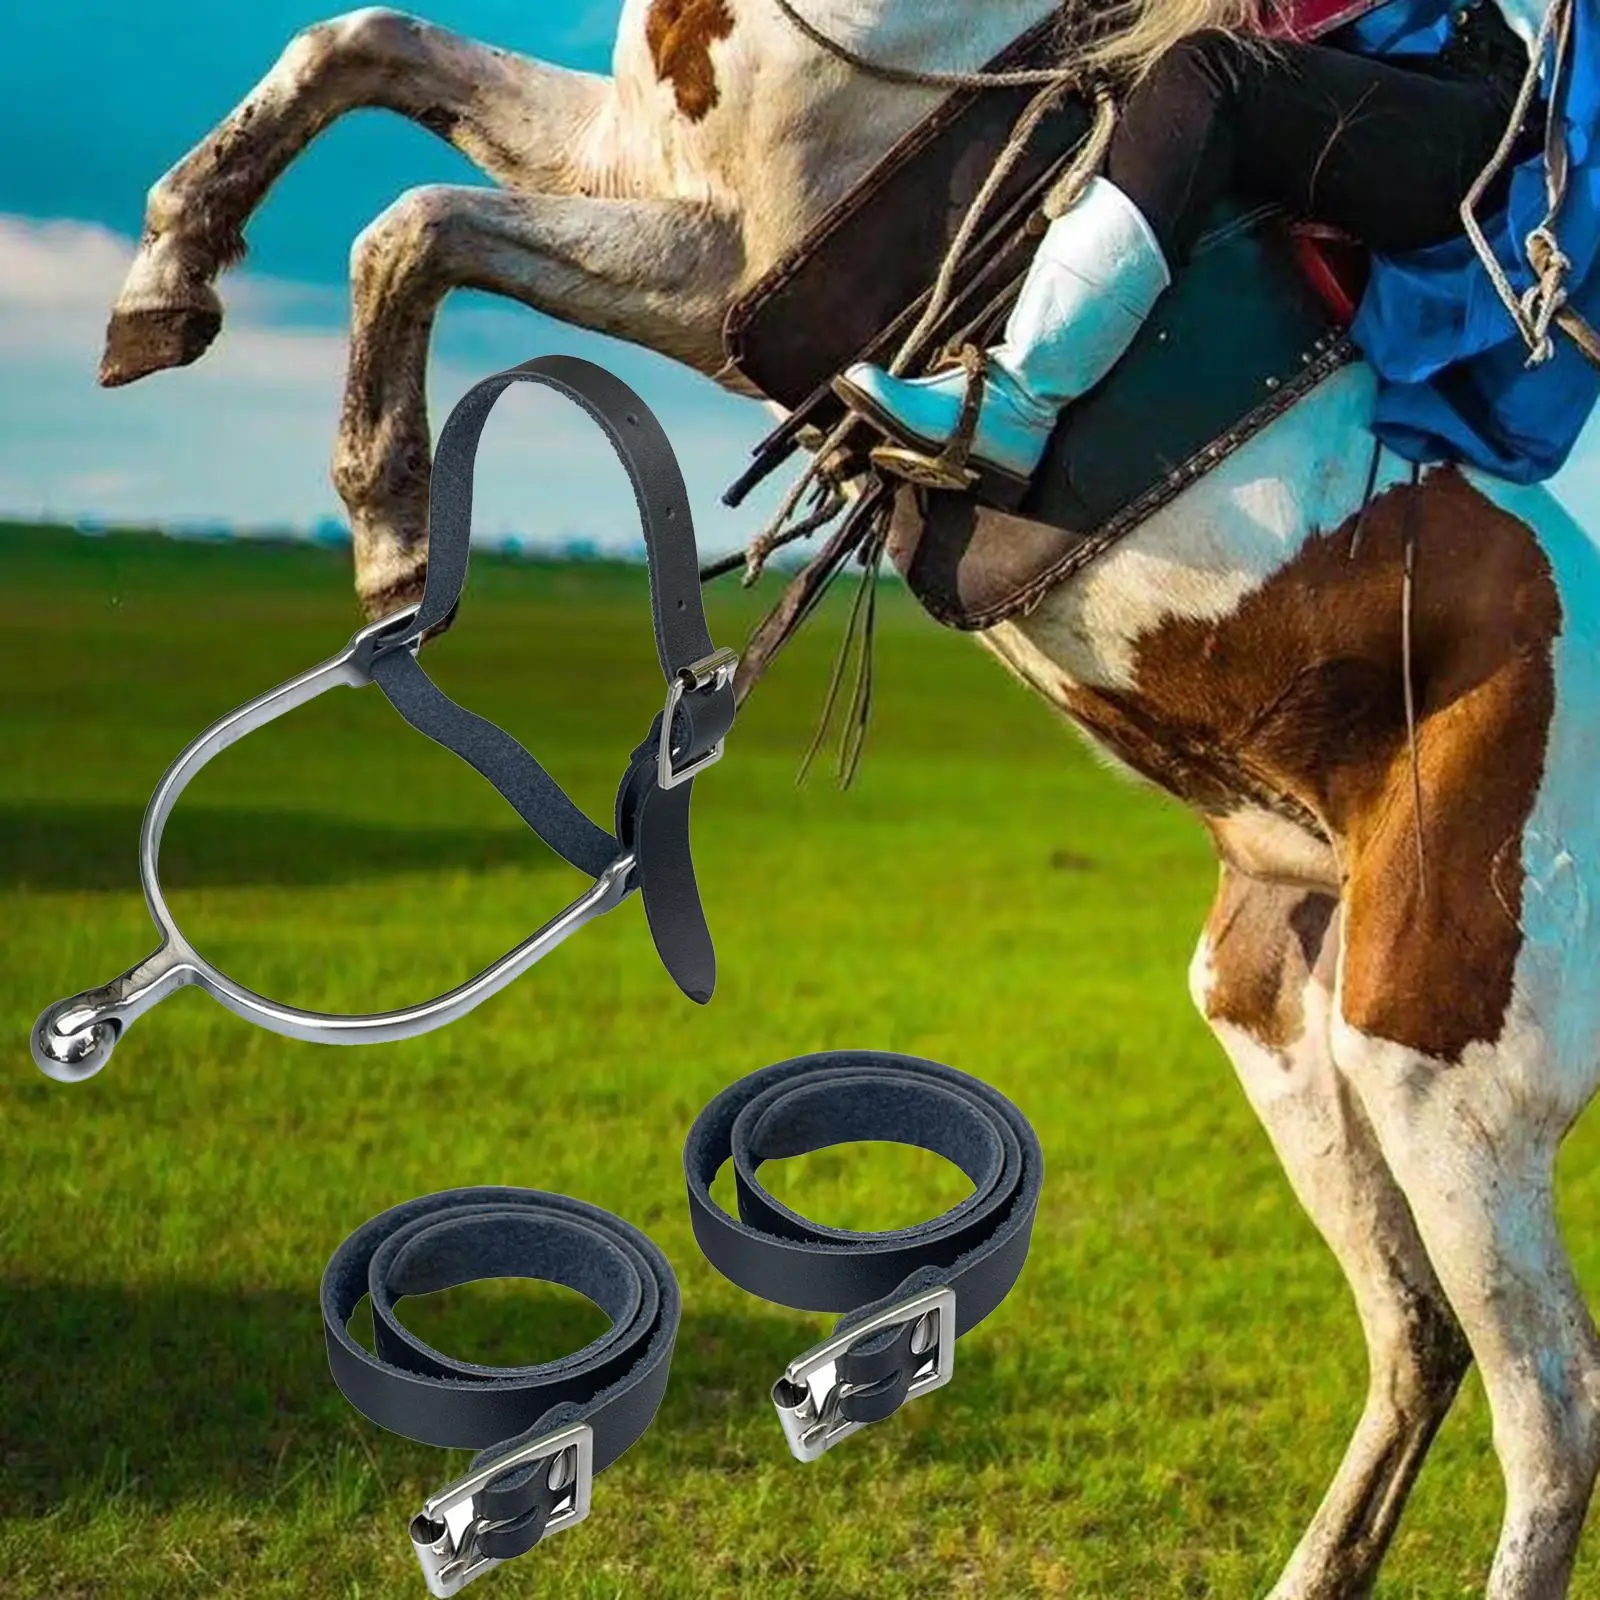 2x Spur Straps English Spur Straps Western Adjustable Premium Women Men Boot Straps Accessories for Outdoor Sports Horse Riding